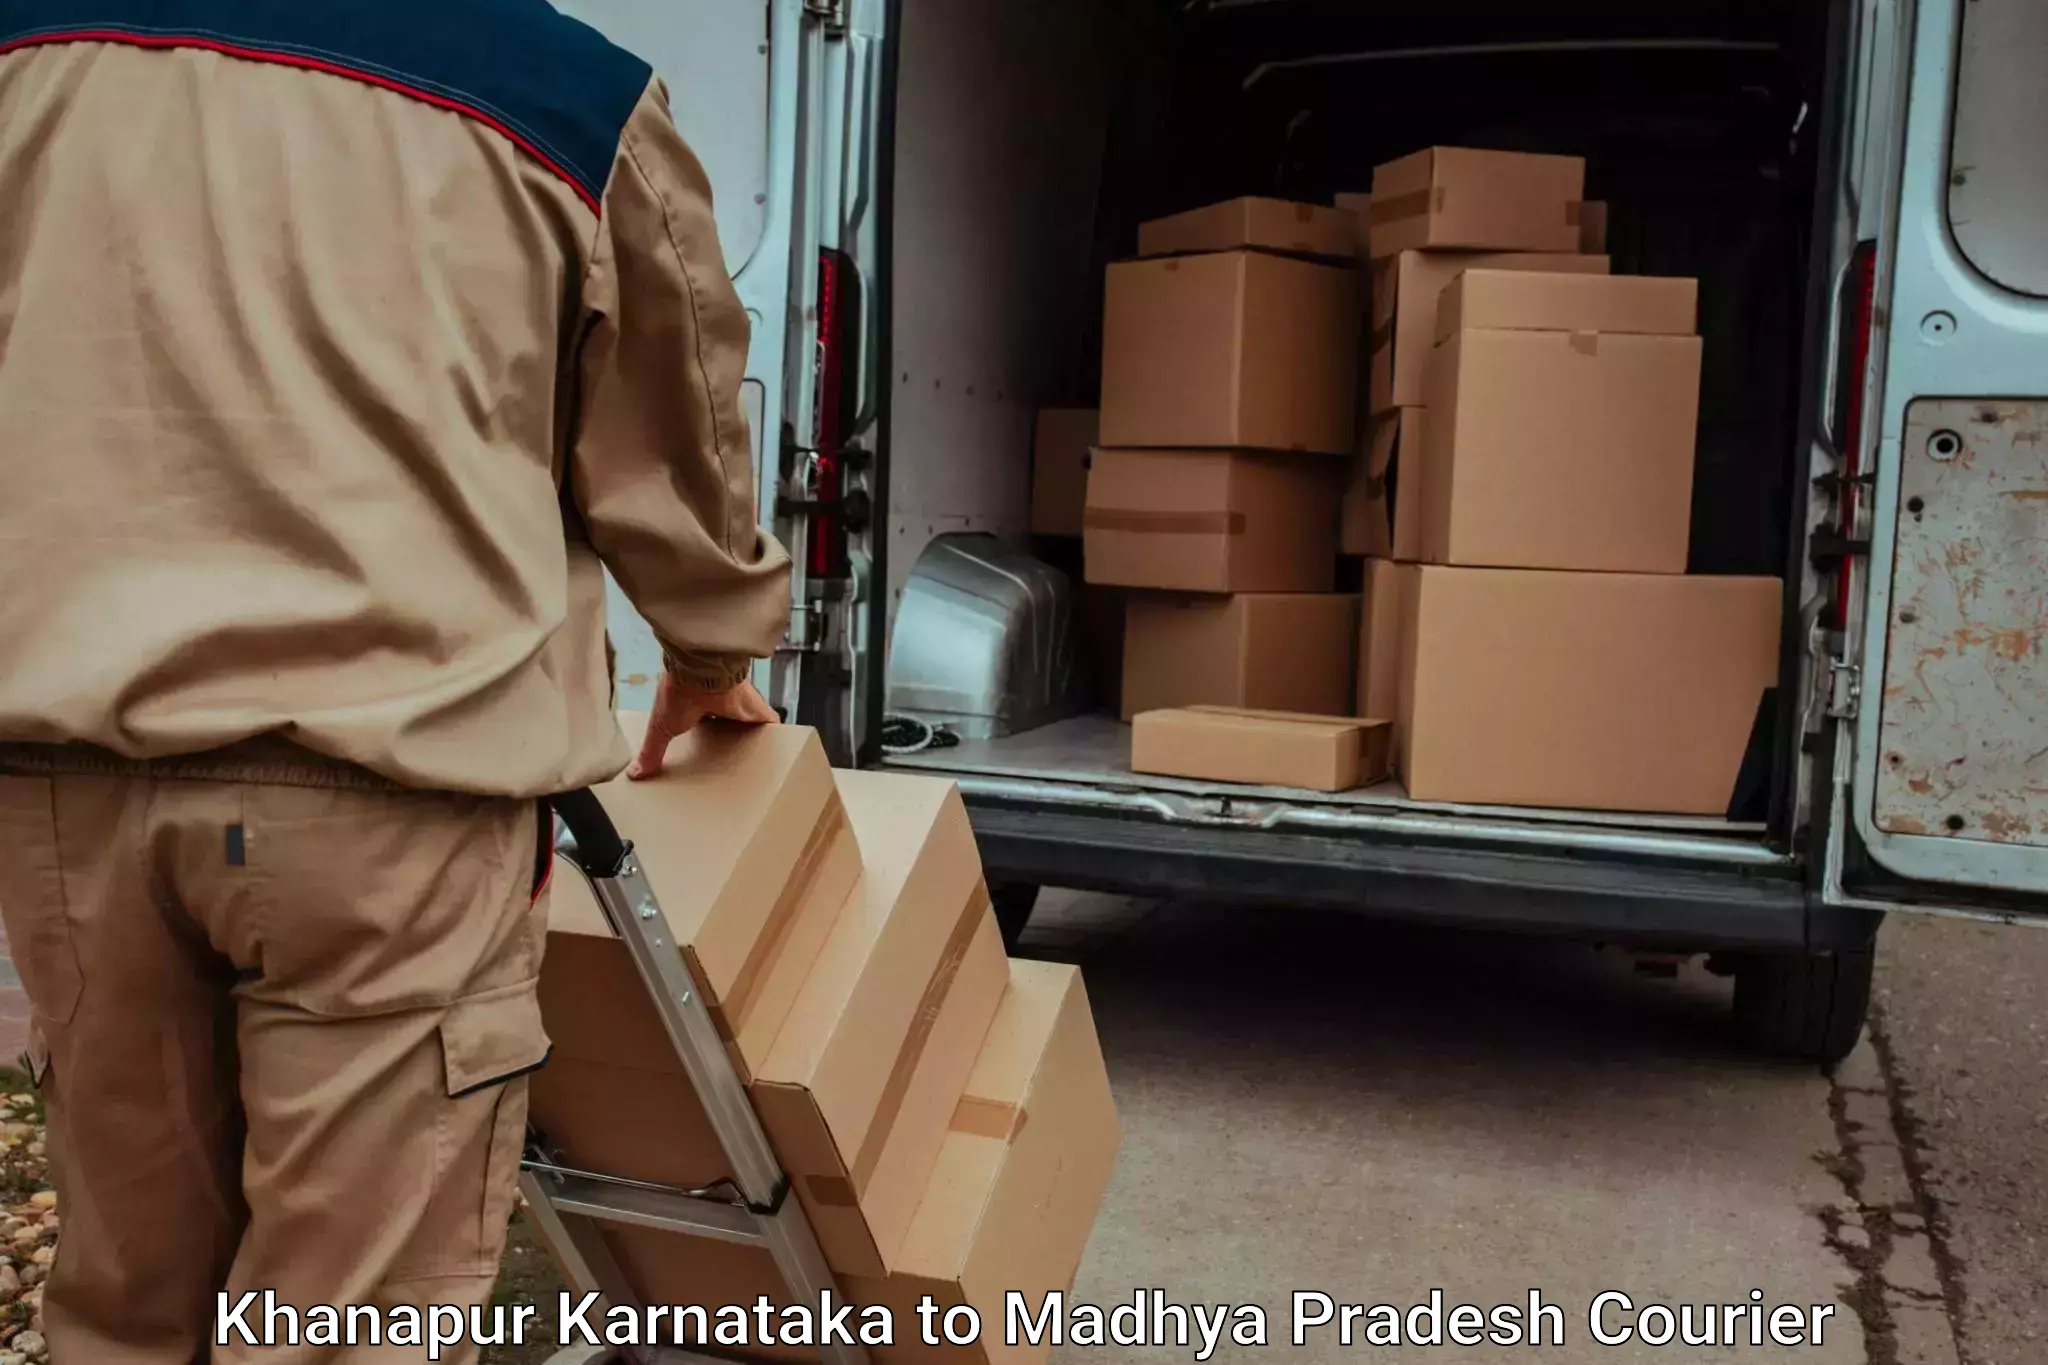 Reliable baggage delivery Khanapur Karnataka to Chand Chaurai